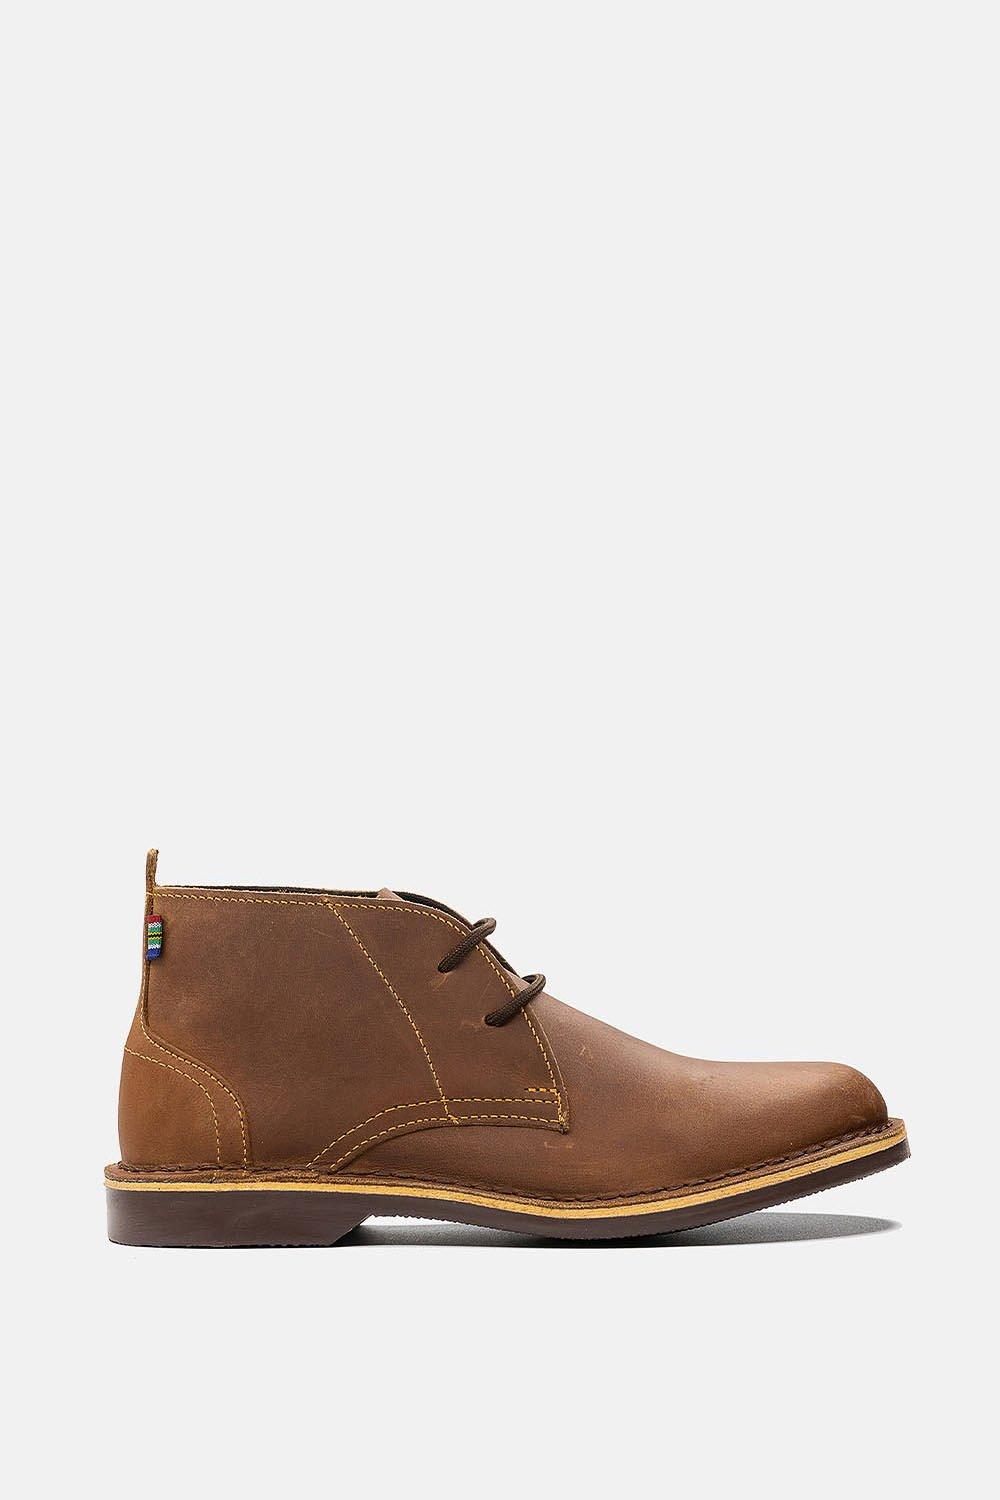 Кожаные ботинки чукка Veldskoen Shoes, коричневый кроссовки levi s woodward rugged chukka dark brown